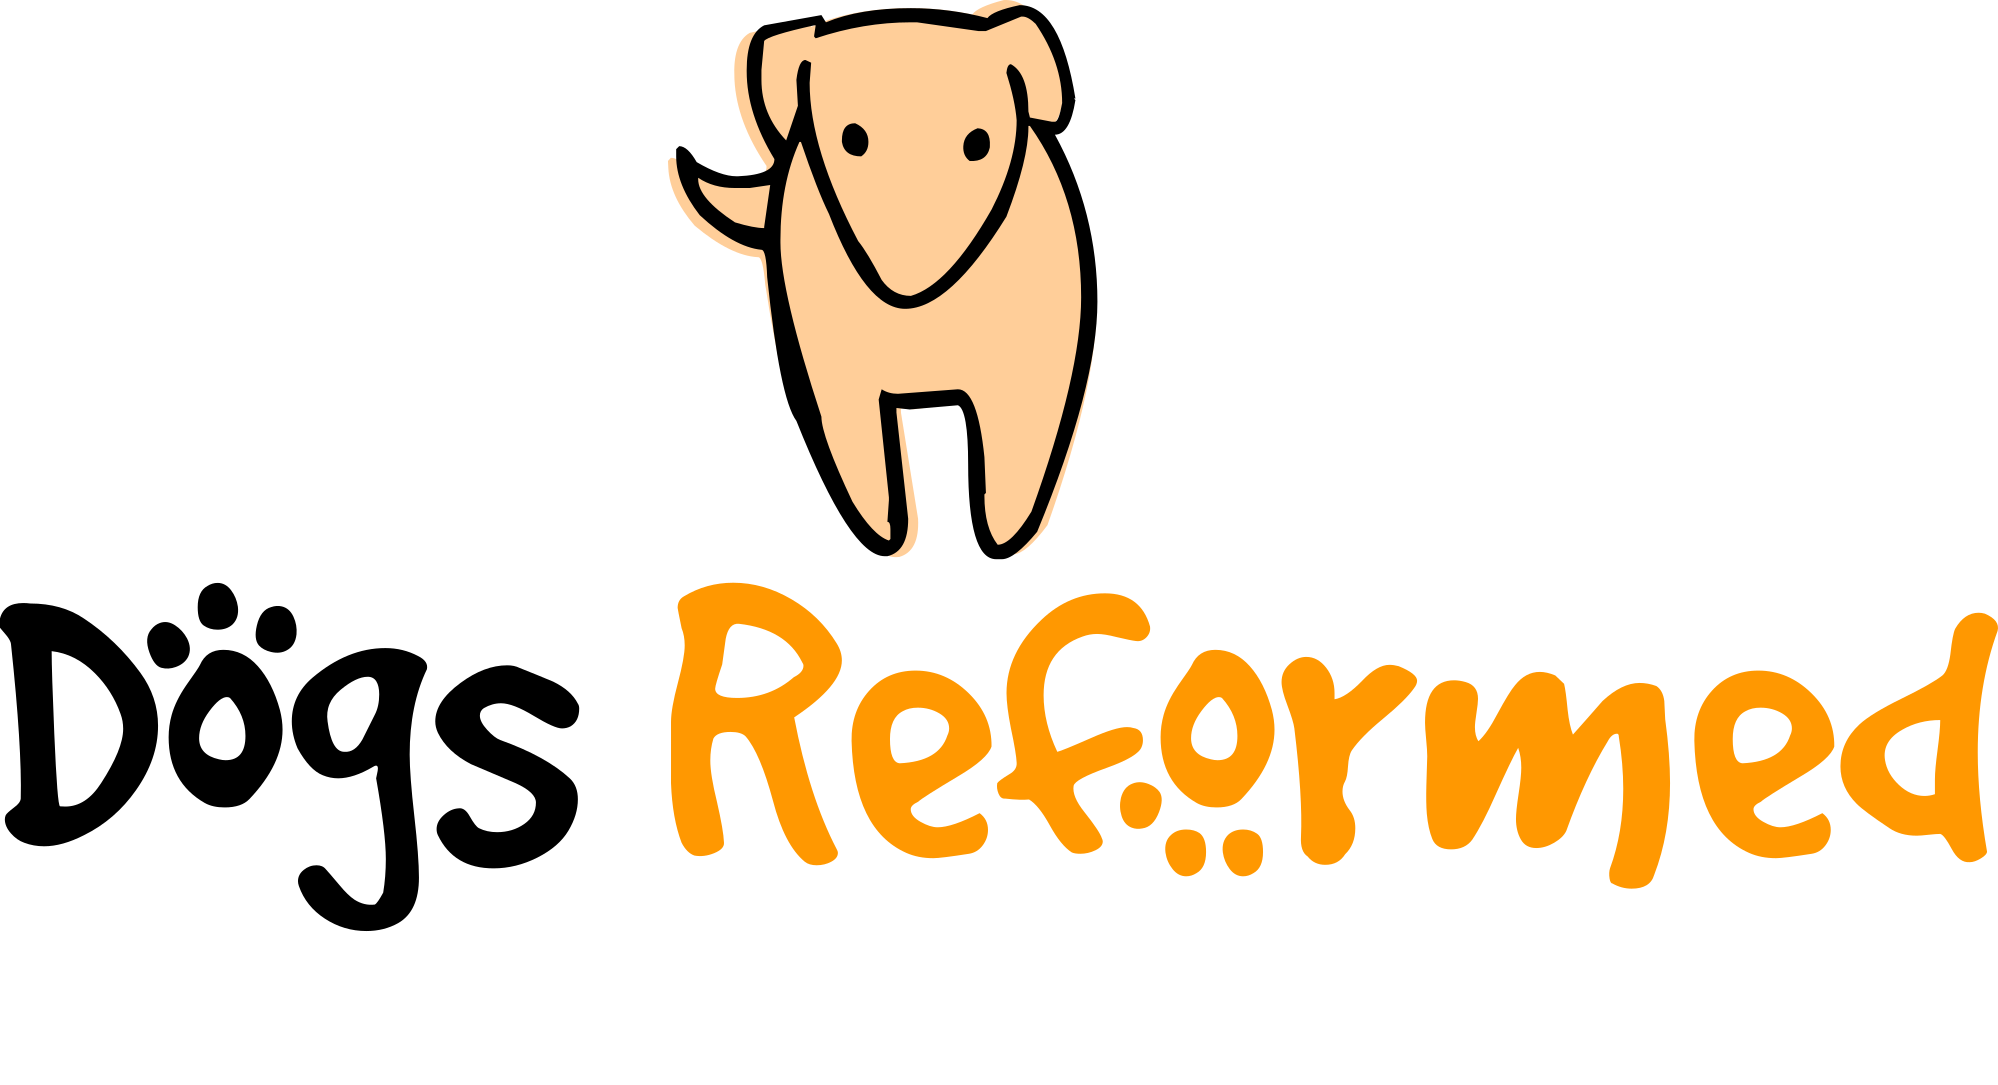 Dogs Reformed logo